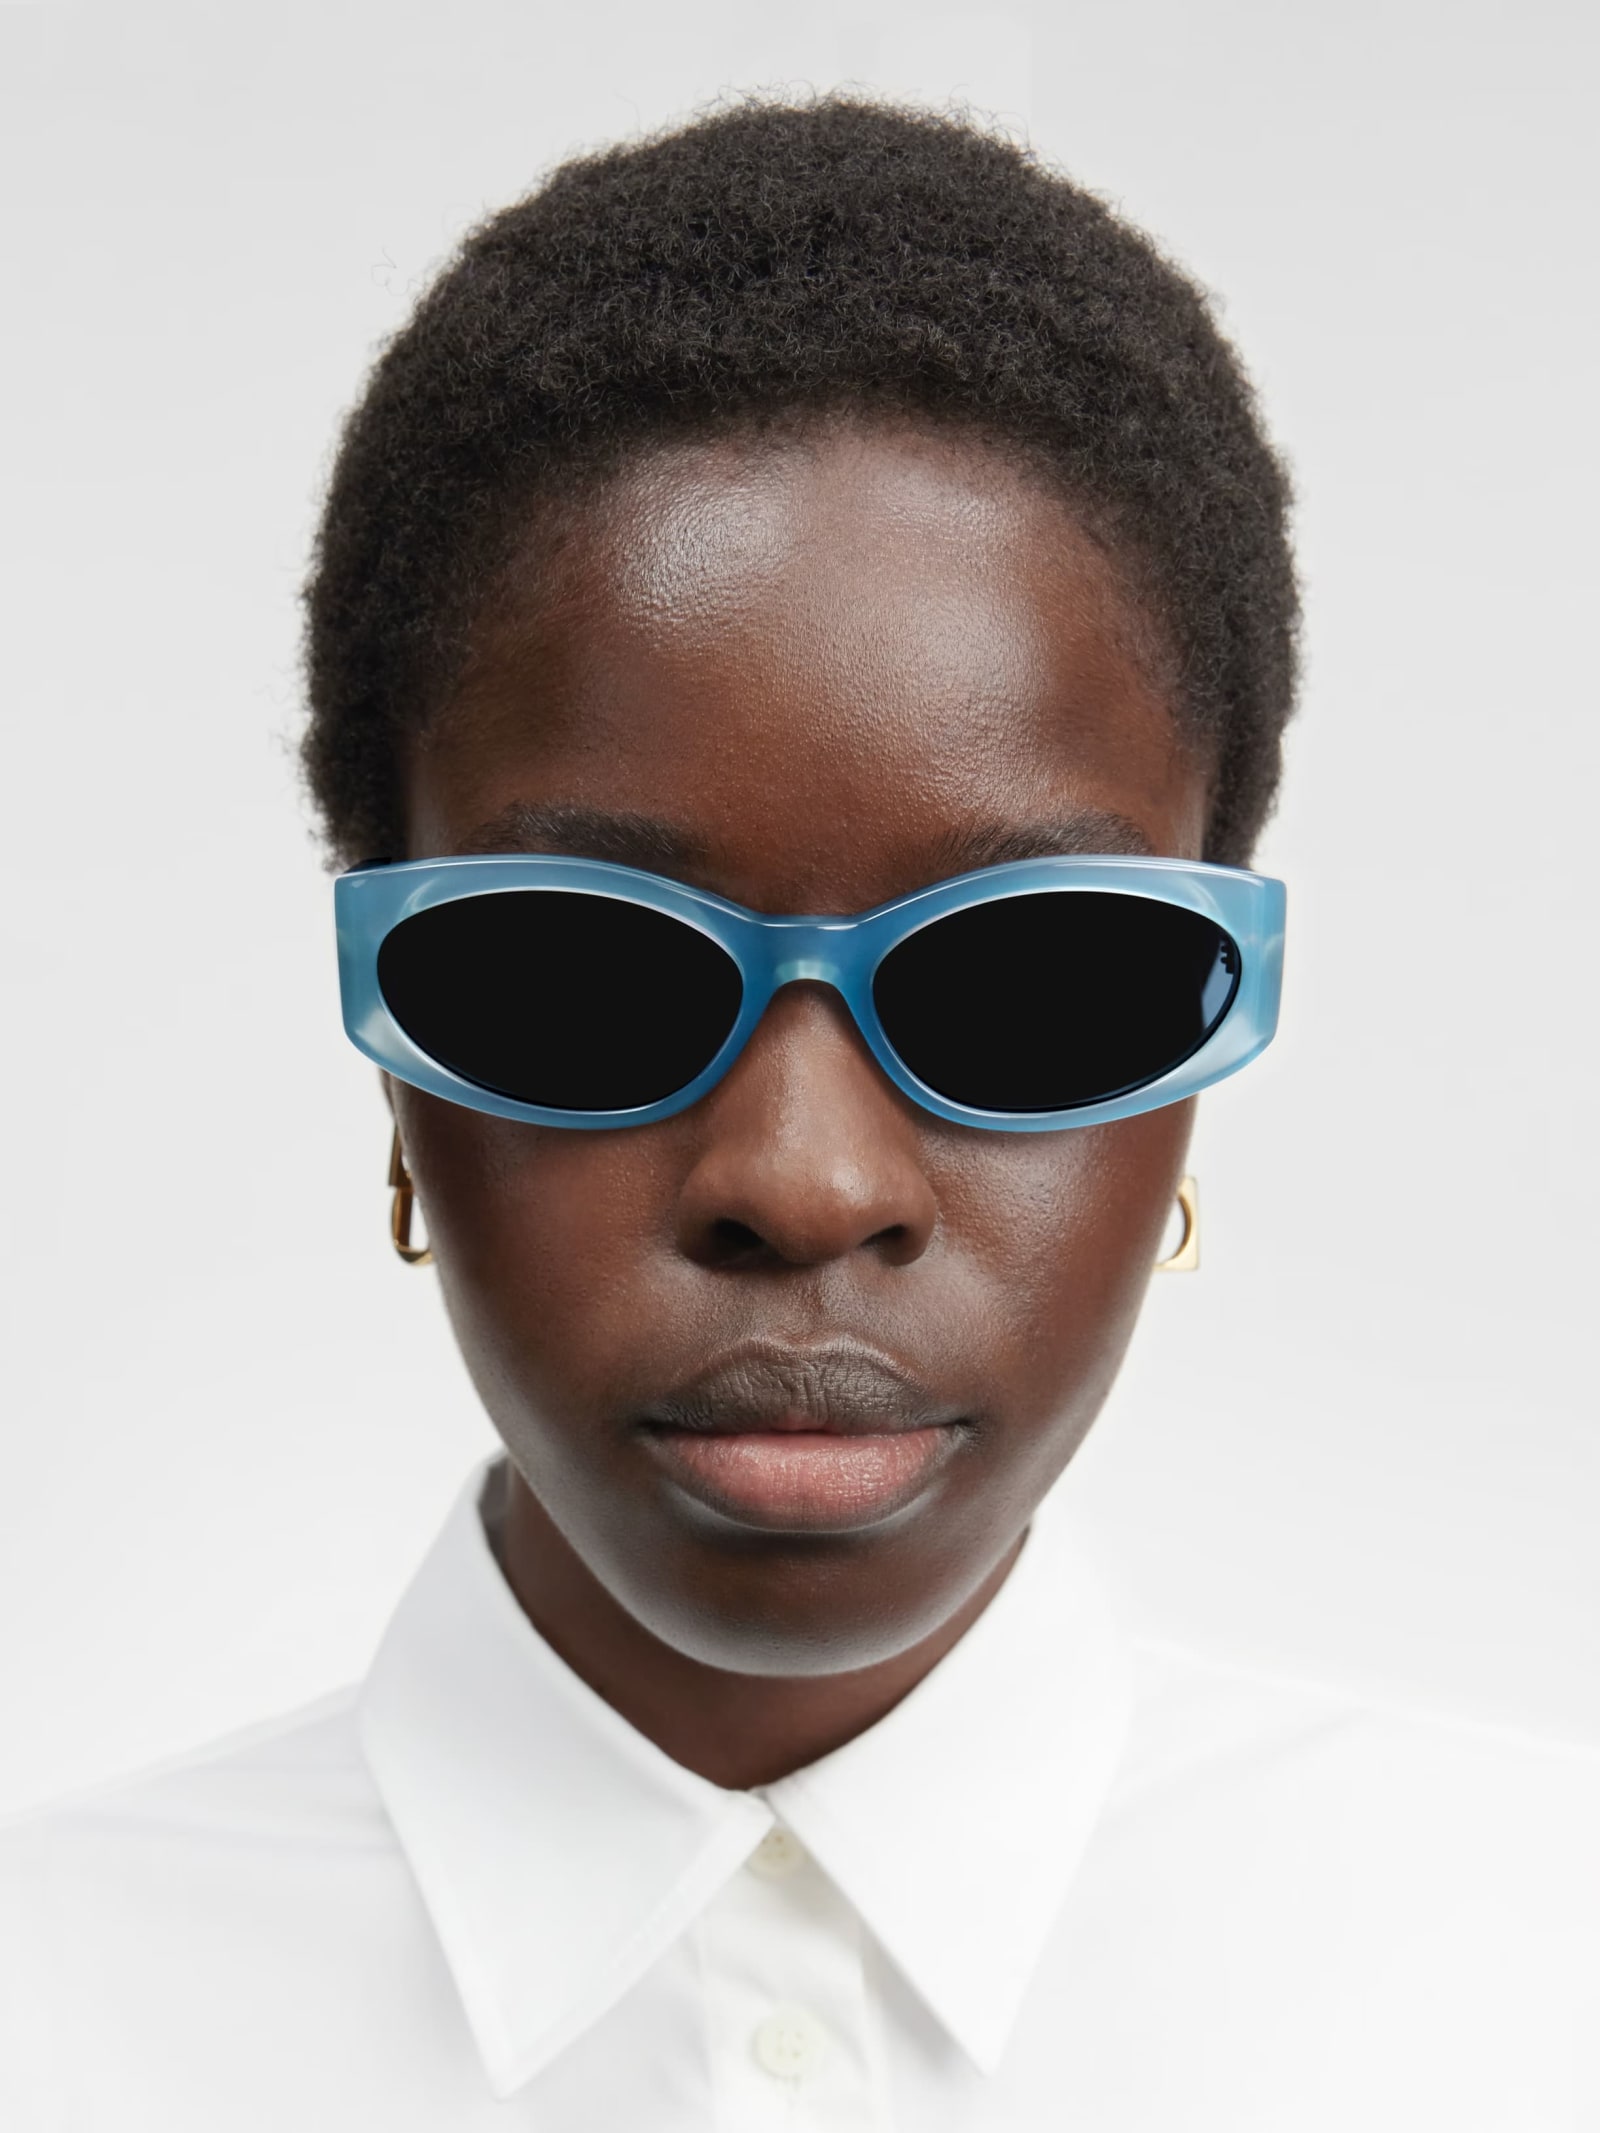 Shop Jacquemus Ovalo - Light Blue Sunglasses